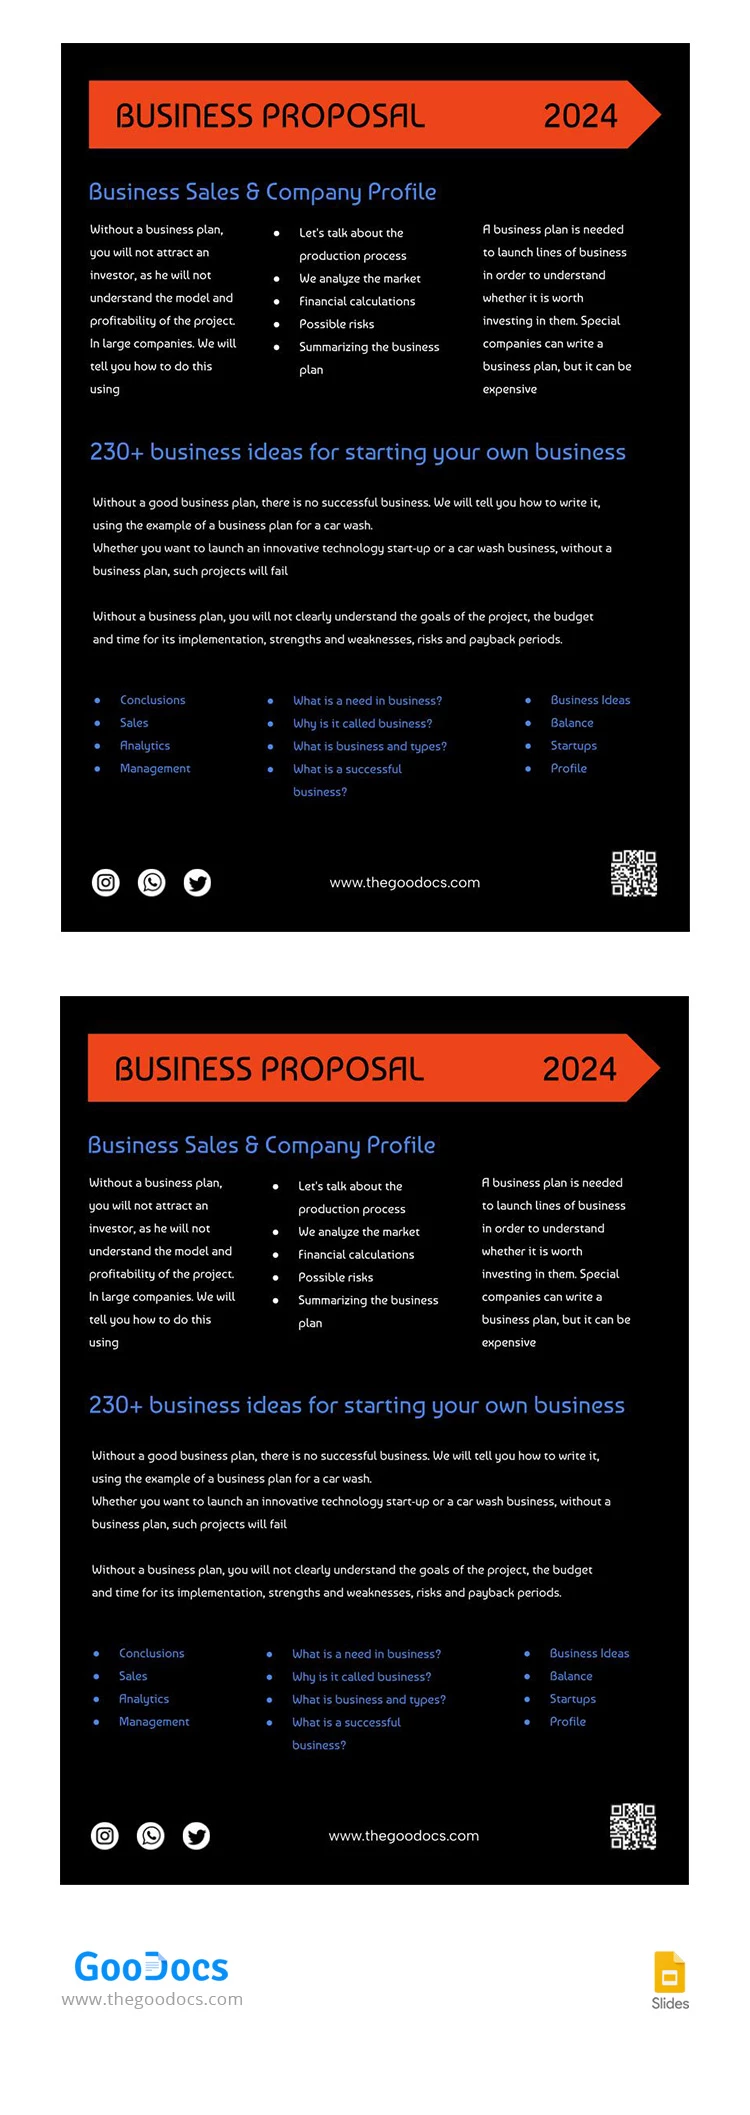 Black Producing Business Proposal - free Google Docs Template - 10067248